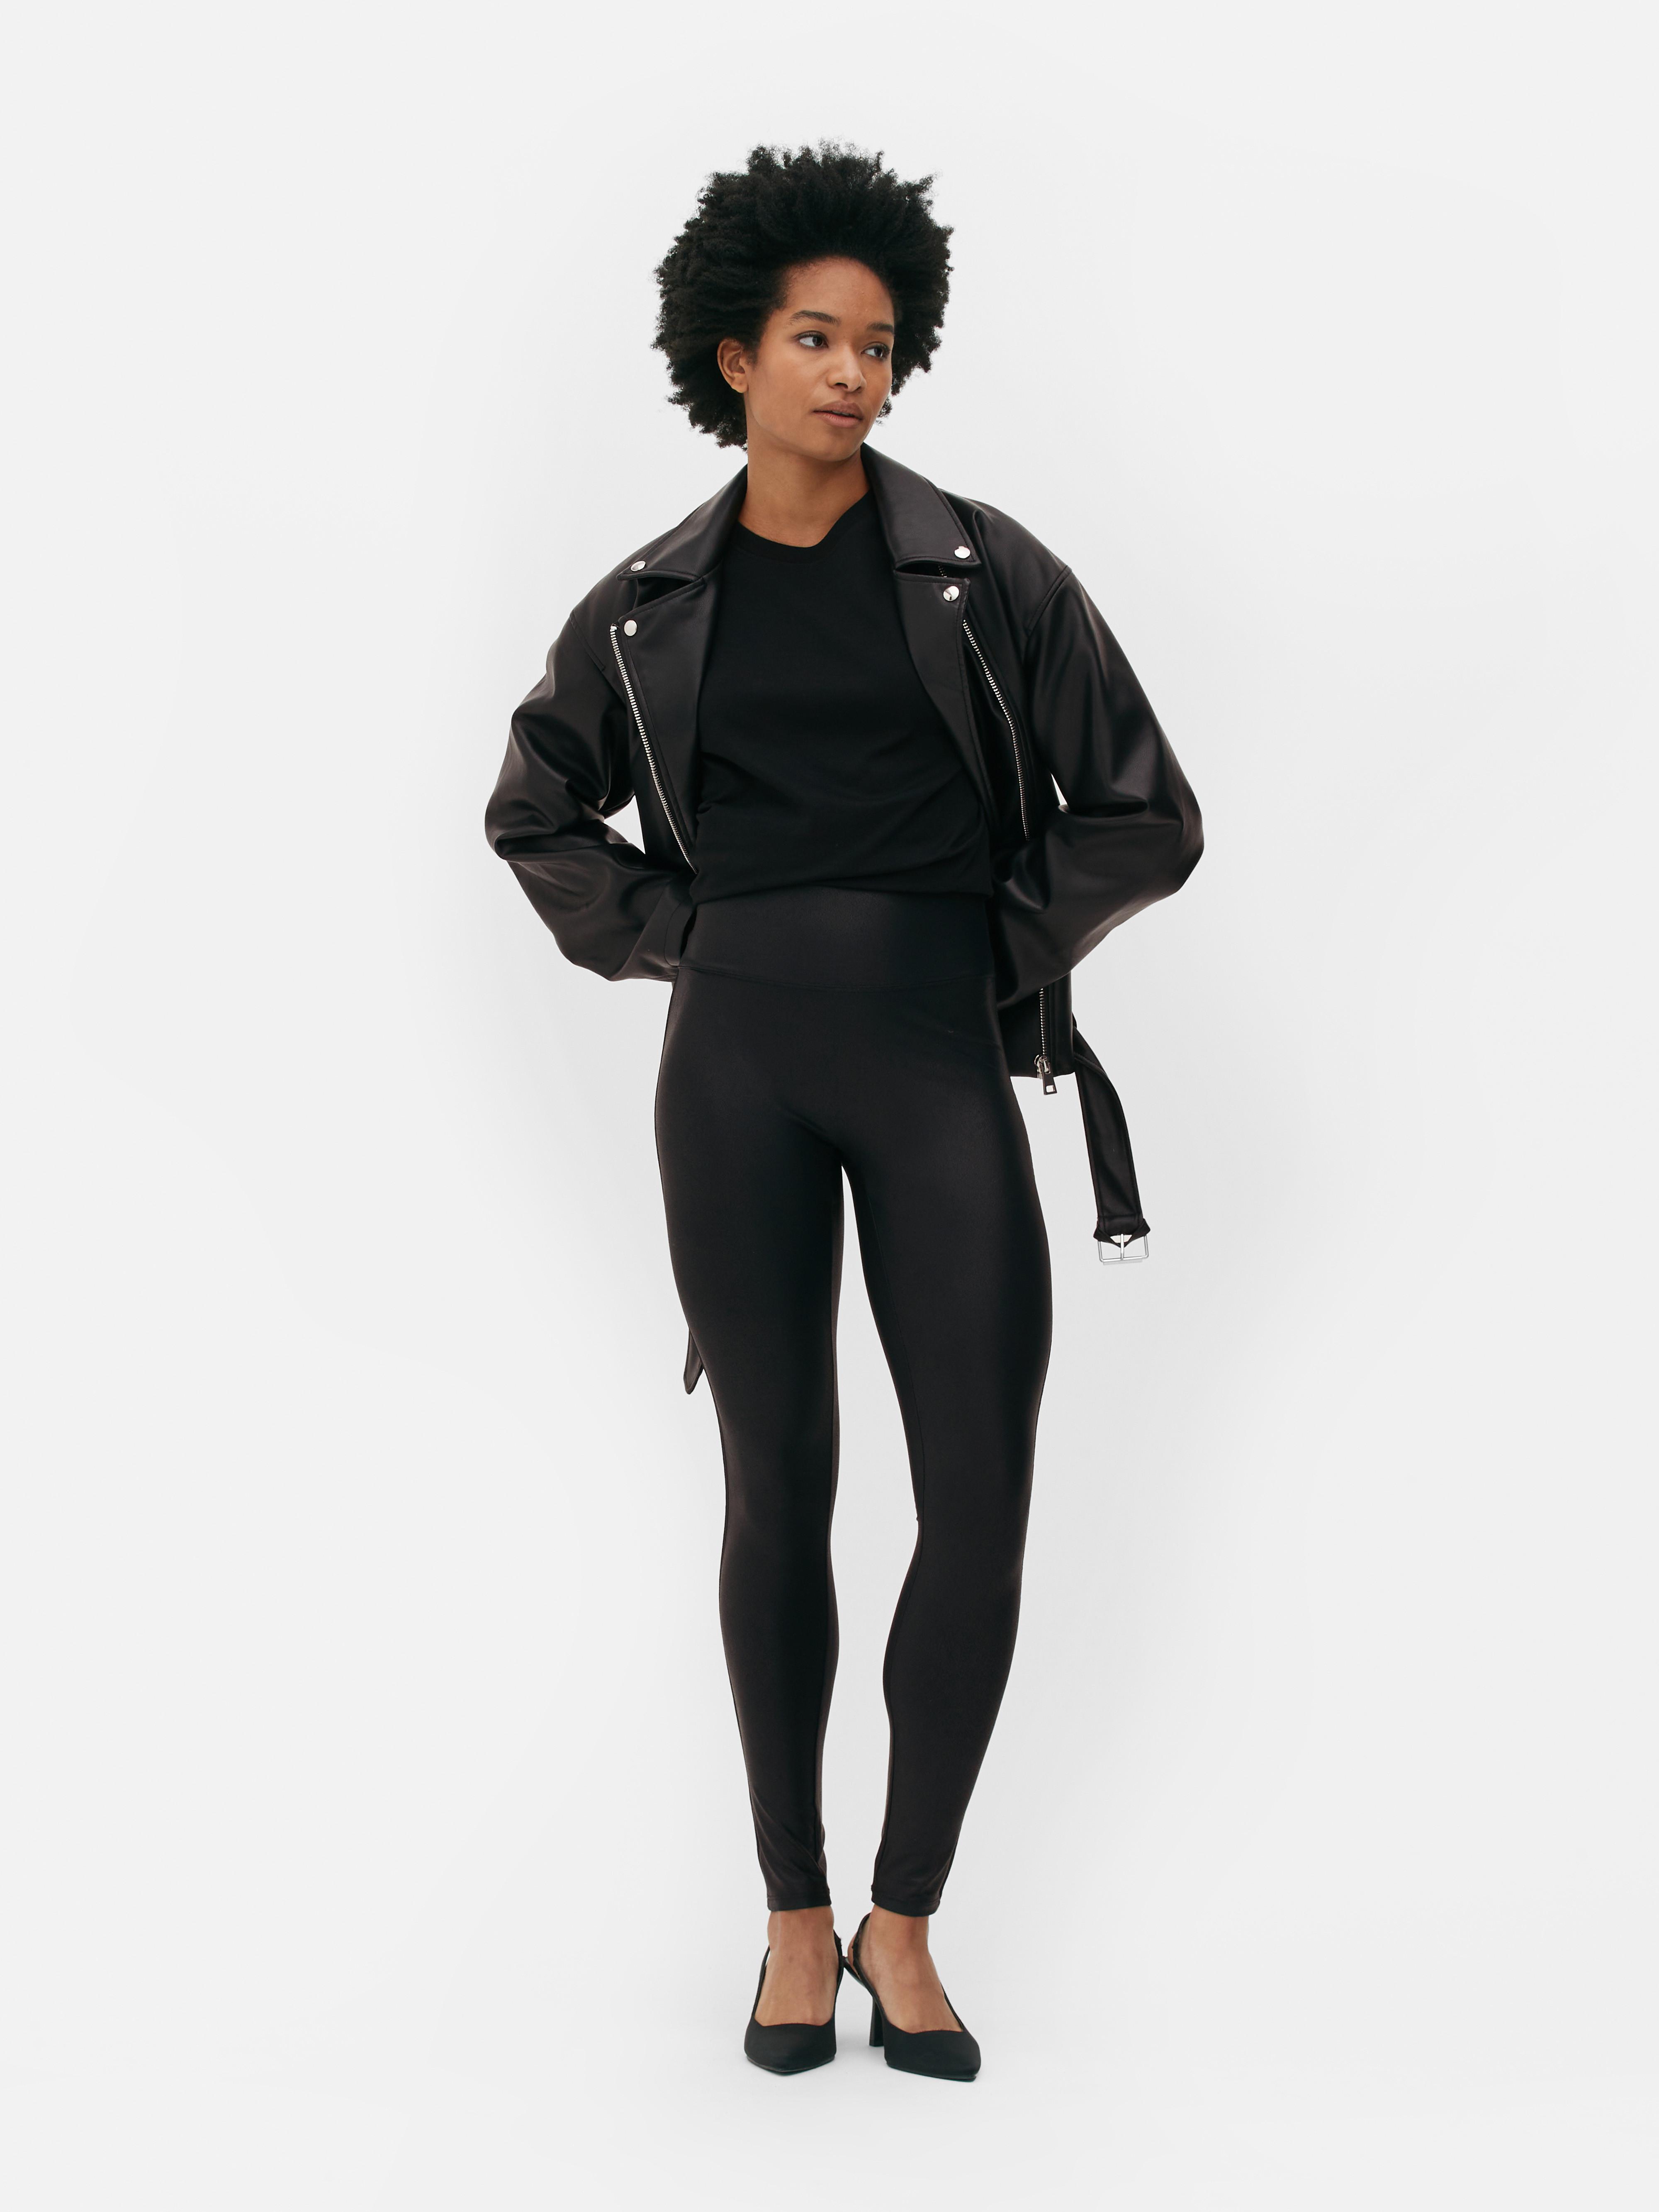 Fashion Design Women's Wetlook Leather Look Leggings, black : :  Fashion